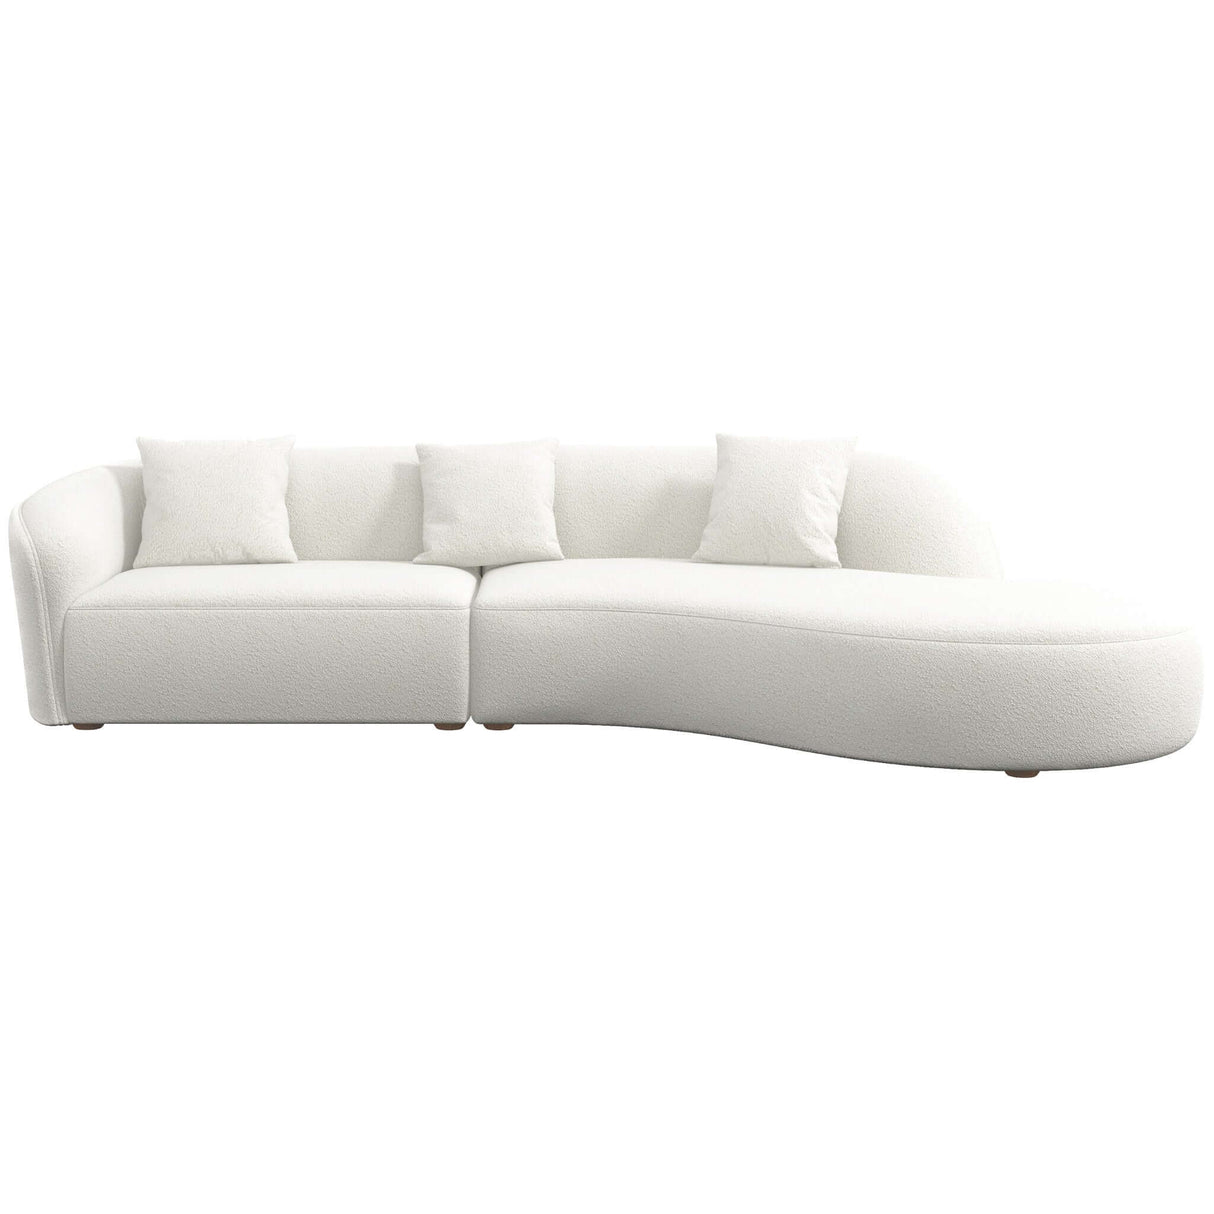 Elijah Japandi Style Curvy Sectional Sofa 126" / Green Velvet